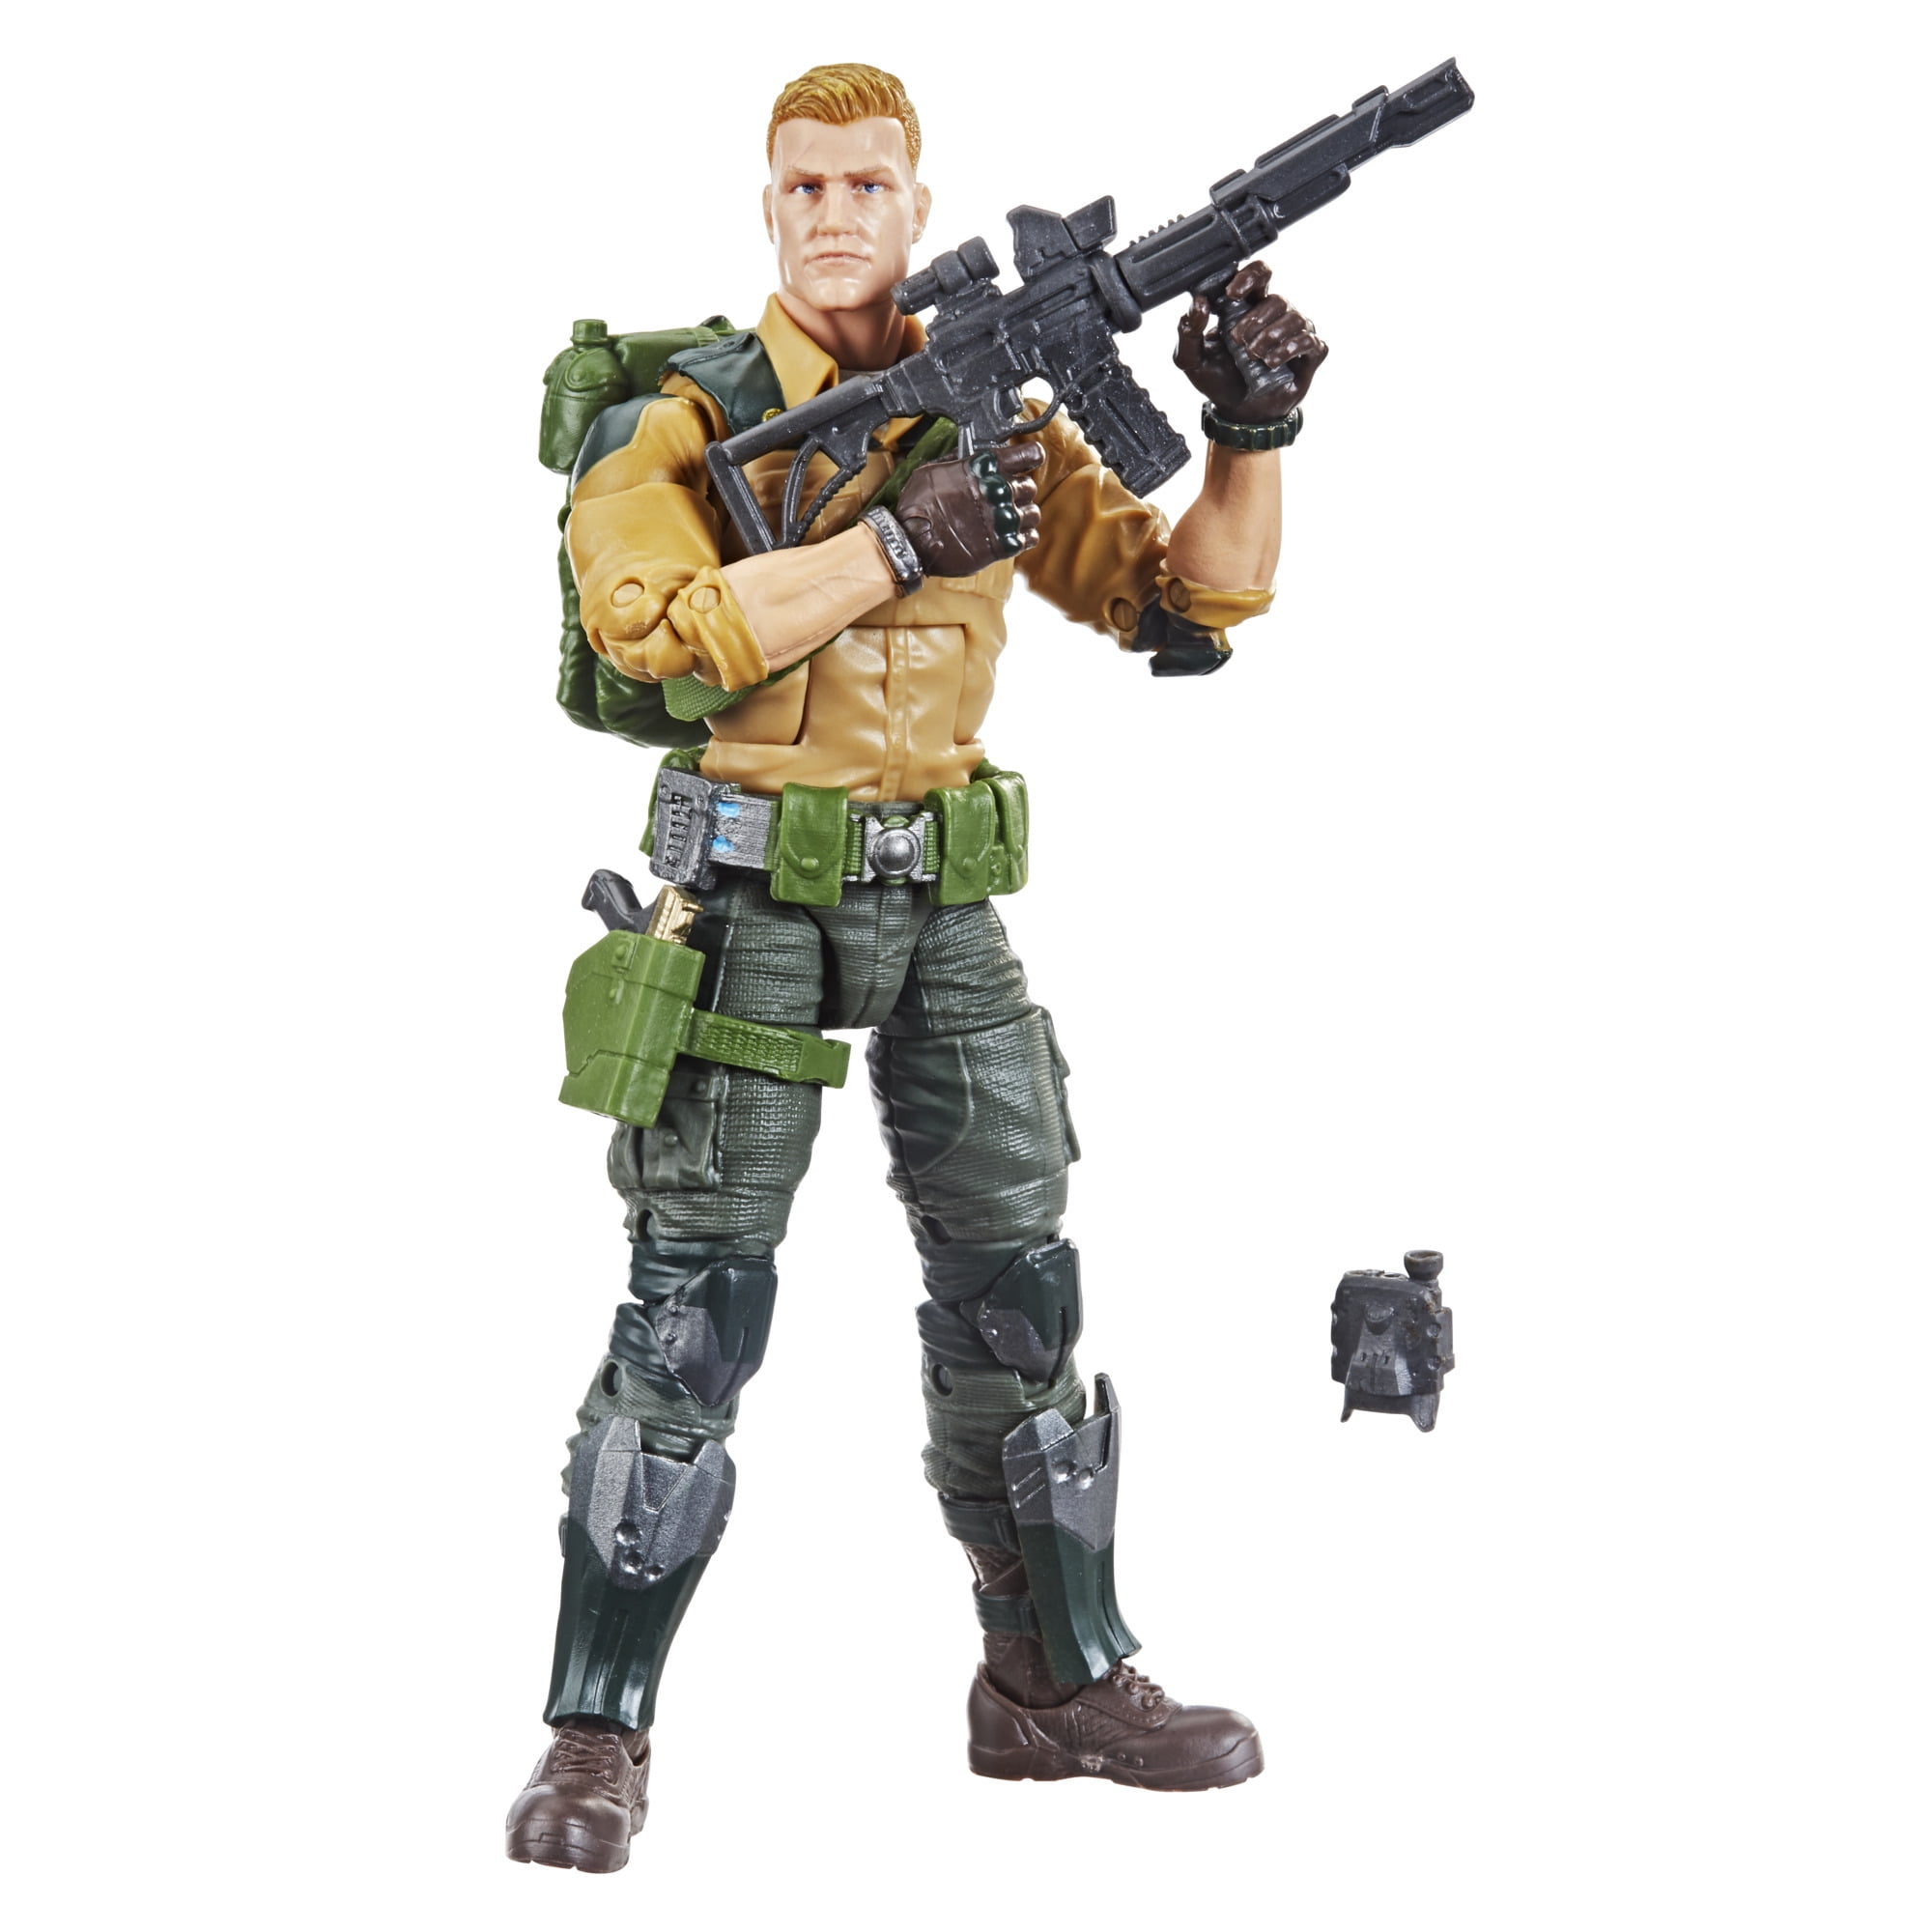 Hasbro GI JOE SOLDIER Action Figure for sale online